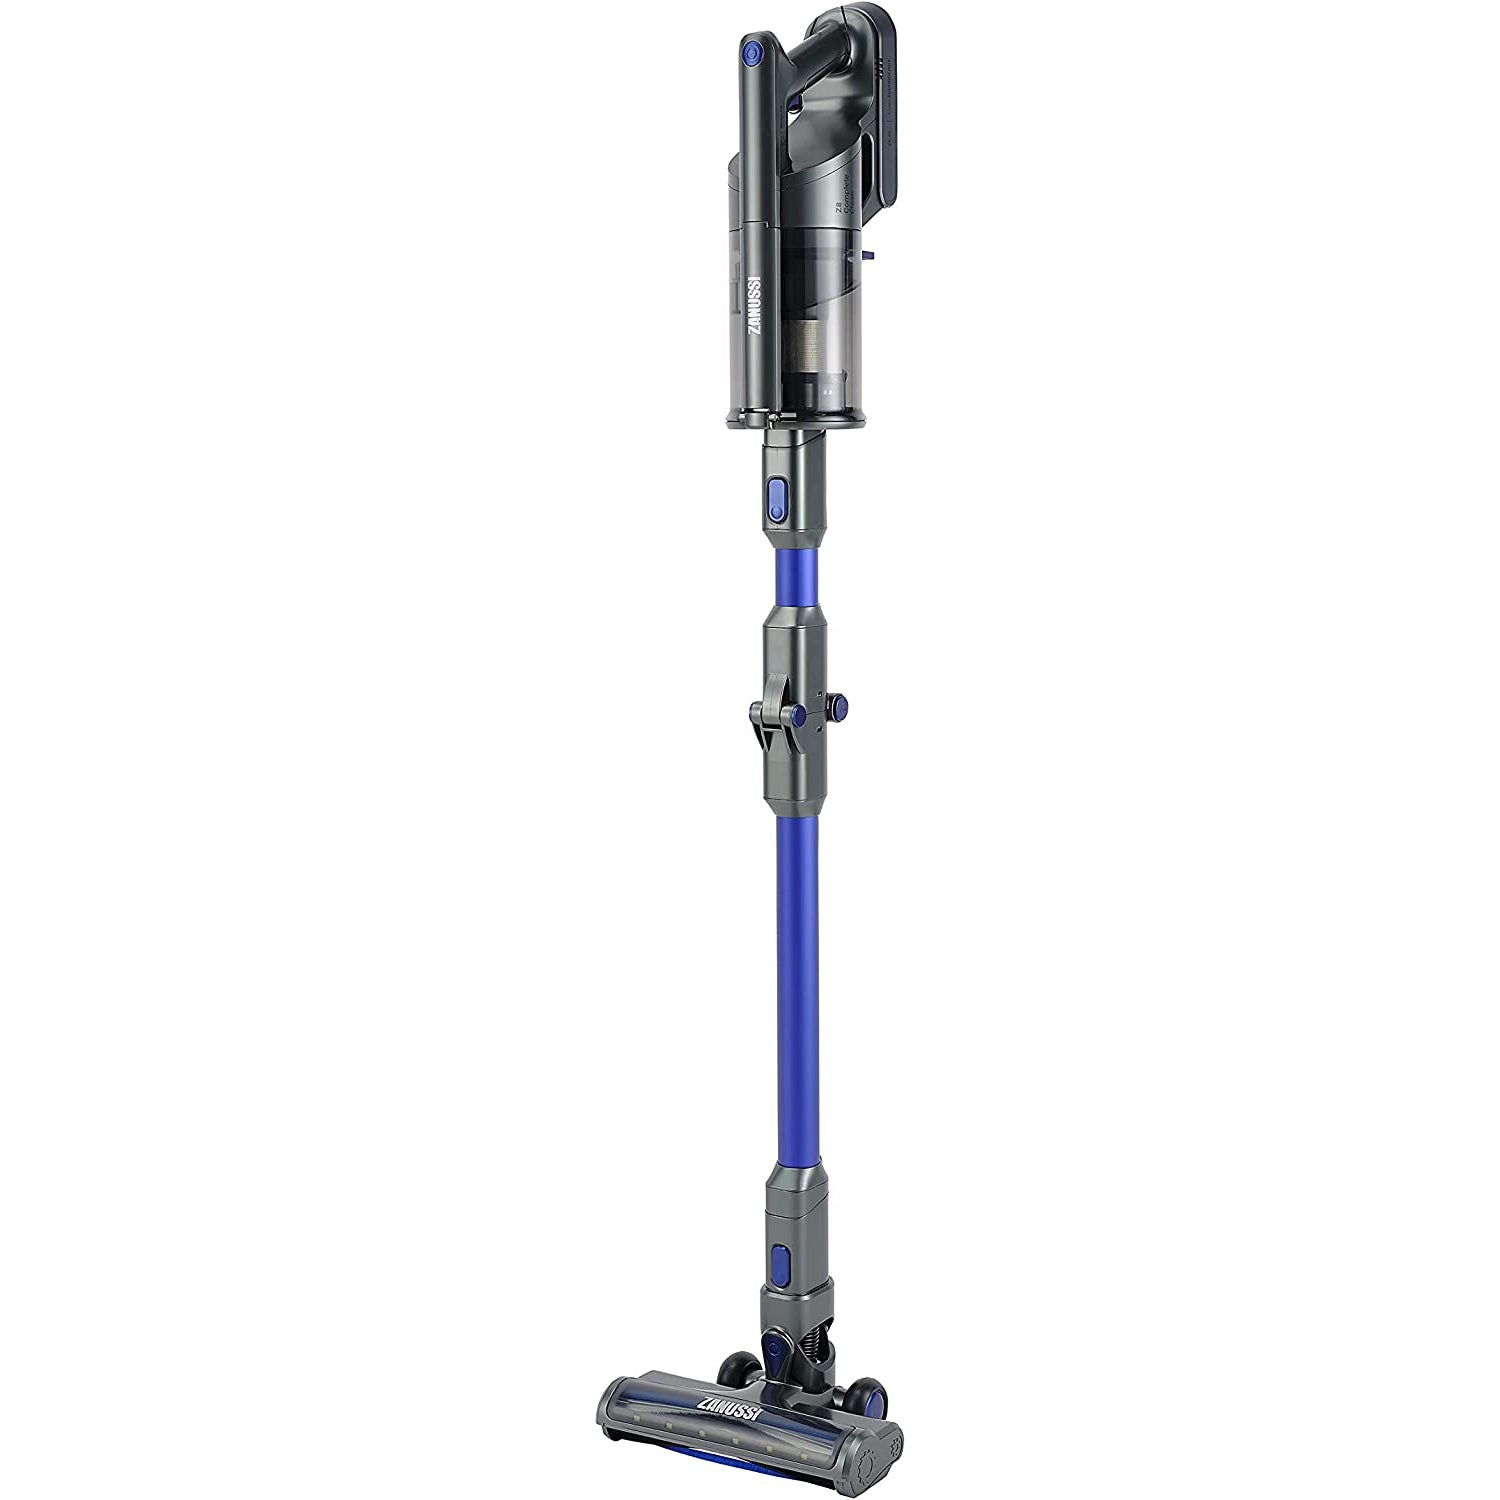 Zanussi Z8 Complete Clean ZANXZ251BL Cordless Vacuum Cleaner - Blue/Grey - Refurbished Pristine